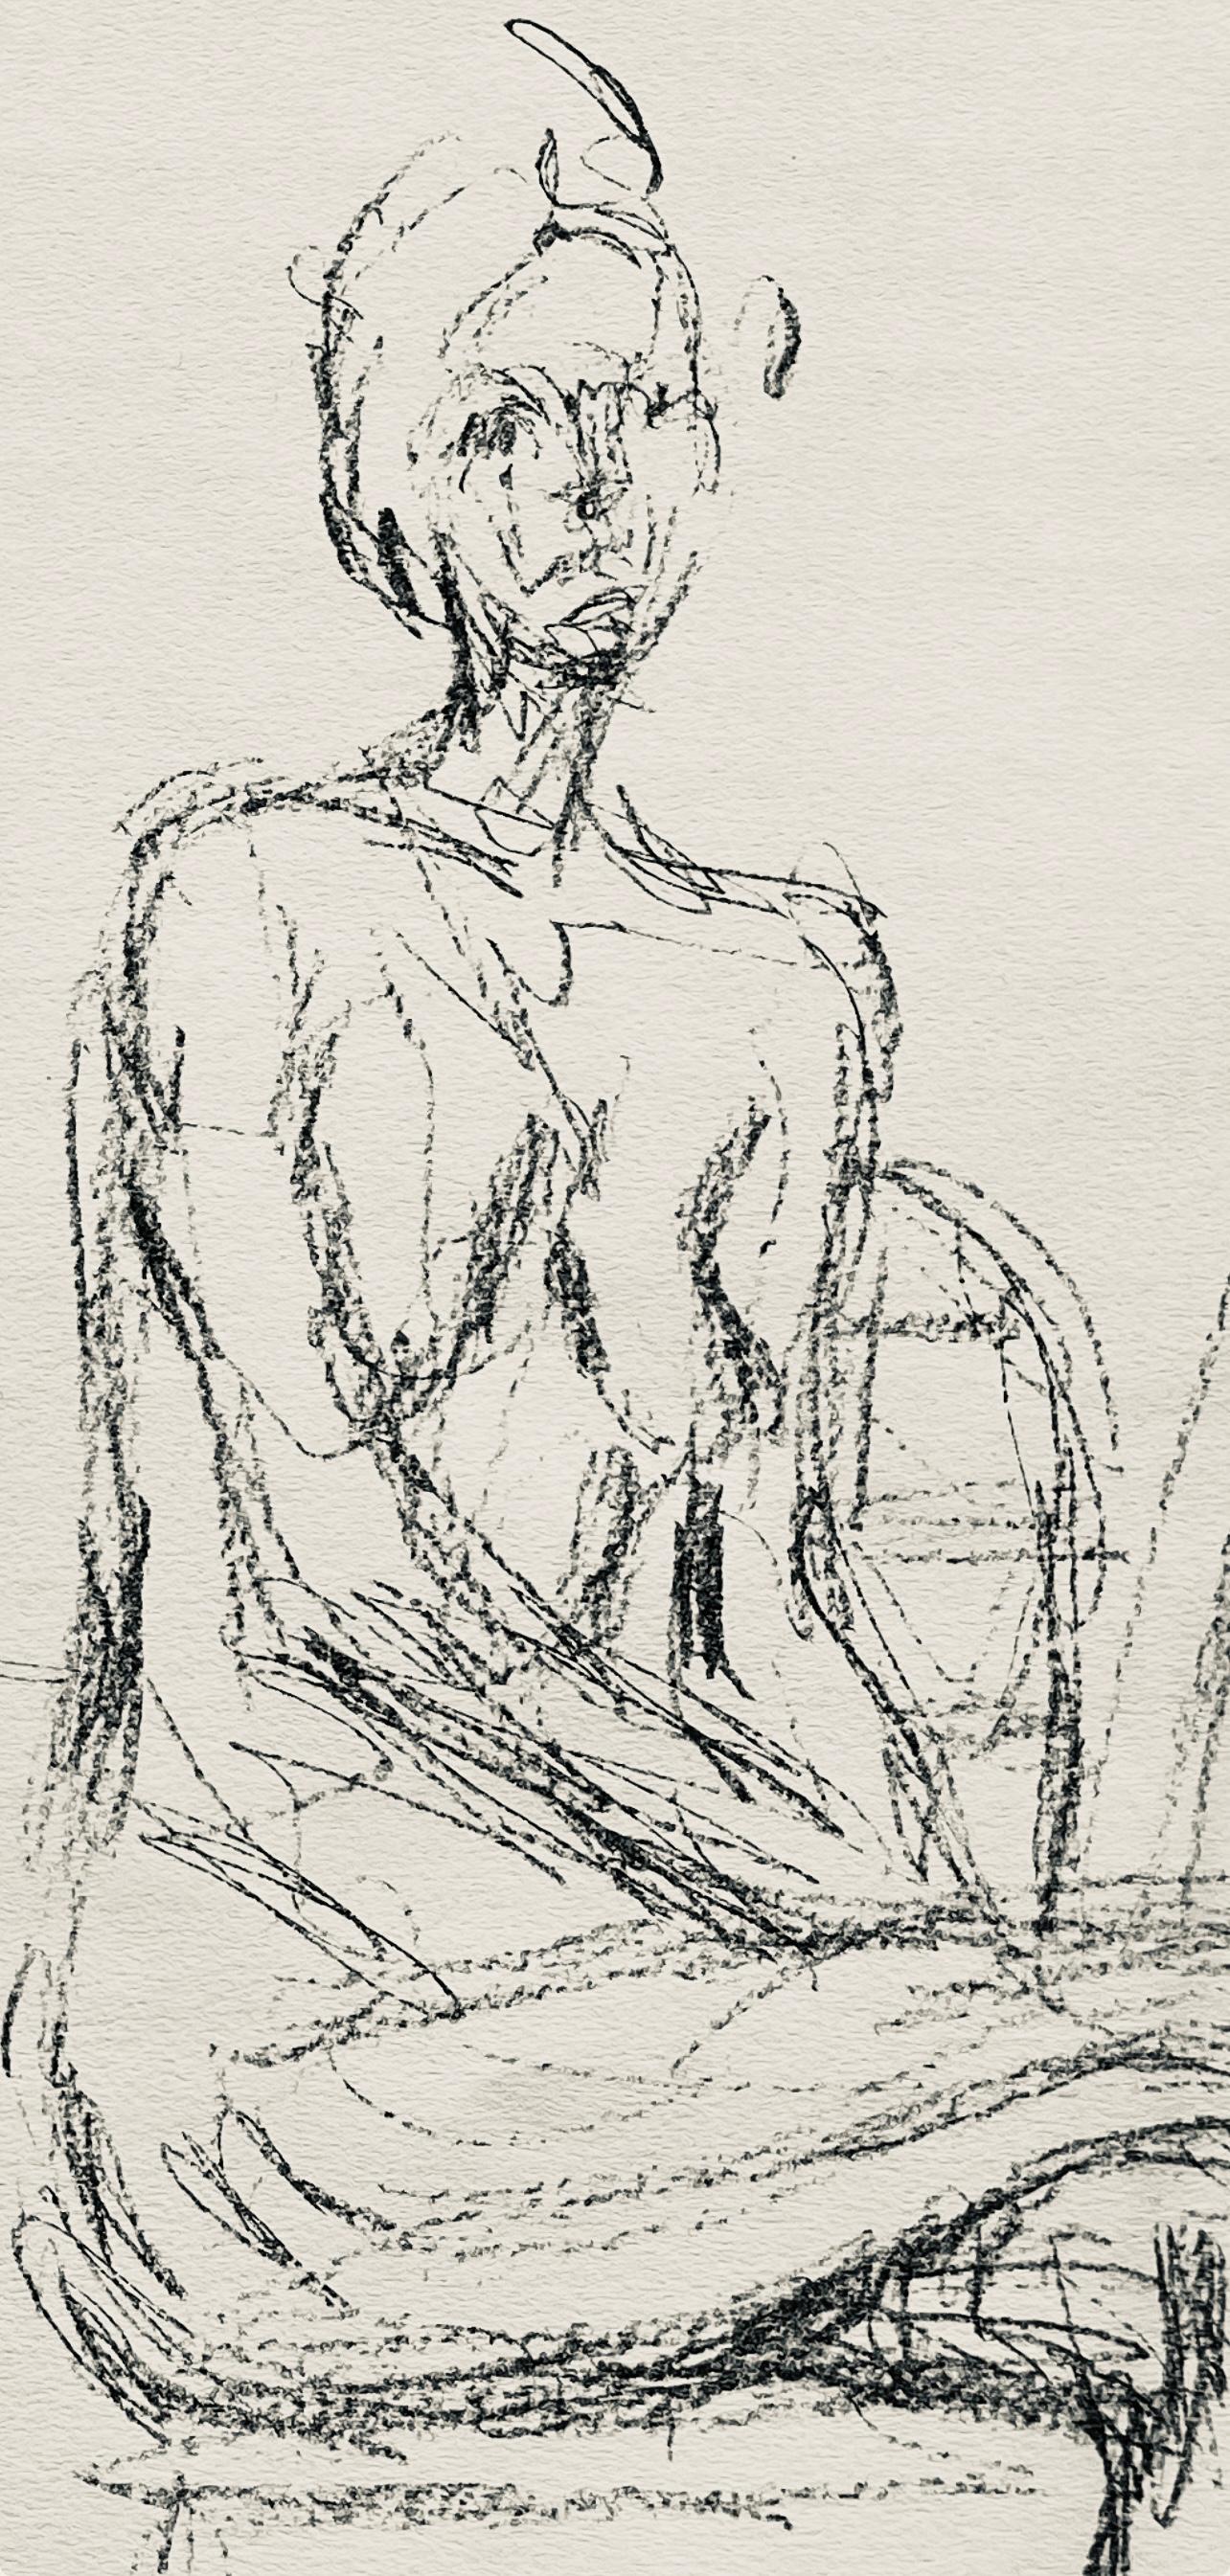 Giacometti, Komposition, Derrière le miroir (nach) (Moderne), Print, von Alberto Giacometti